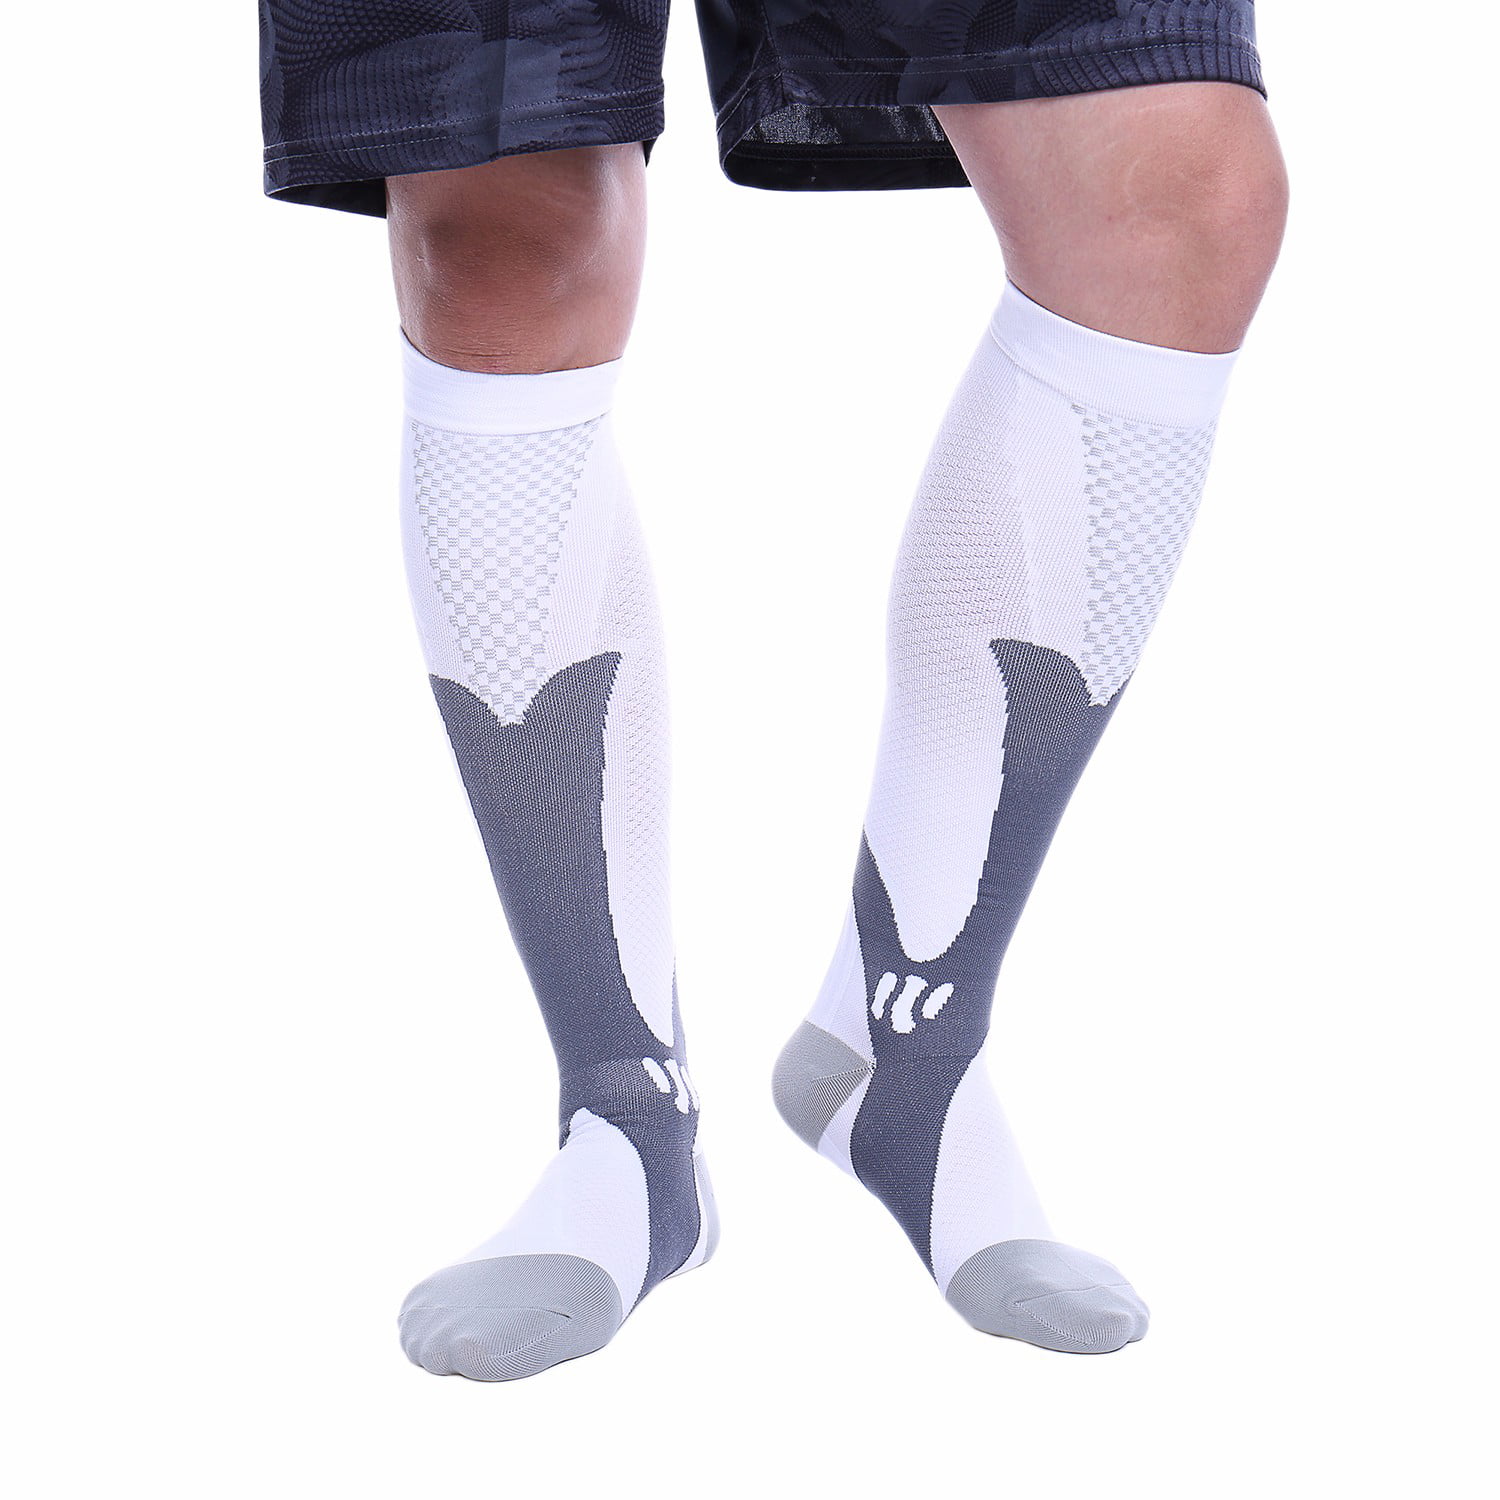 CFR Stock Sports Compression Socks Leg Support Ankle Medical Orthopedic Stocking 